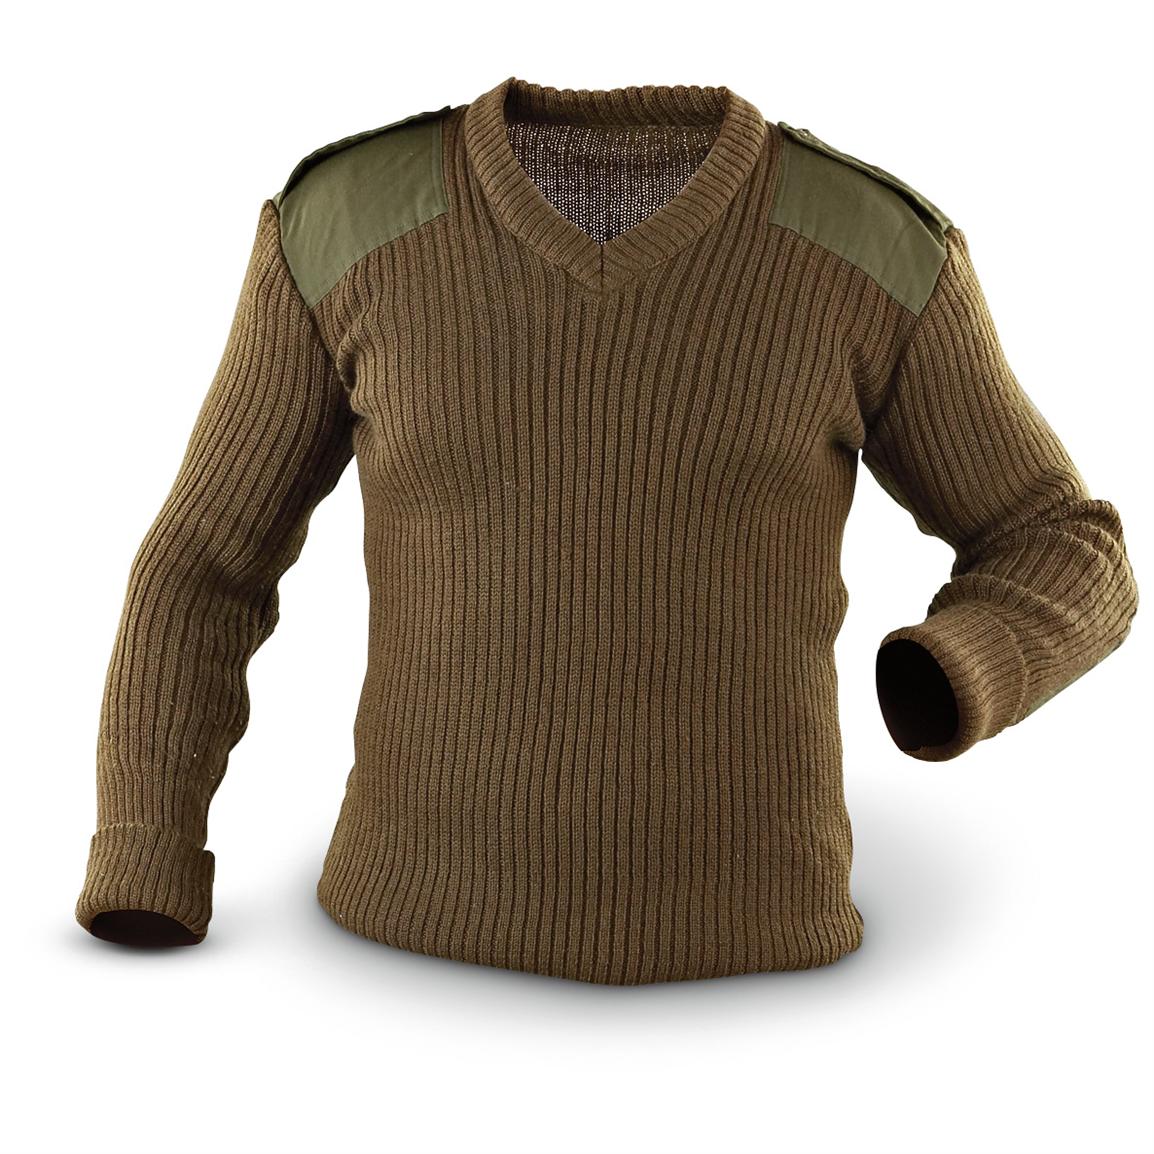 Army Surplus Sweater - Army Military